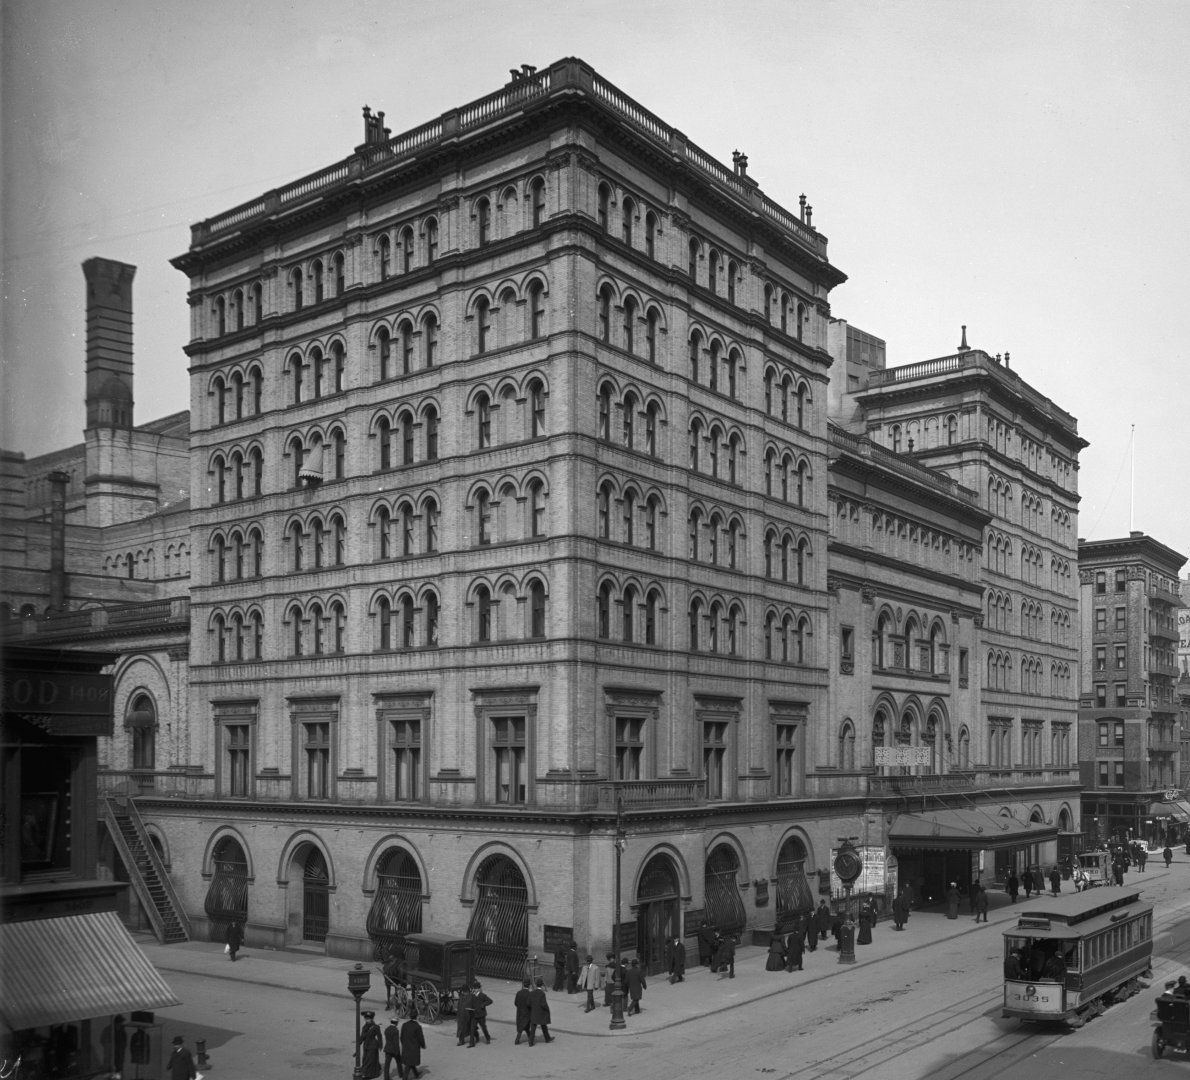 A Metropolitan Opera House New Yorkban, 1905-ben - forrás: wikipedia